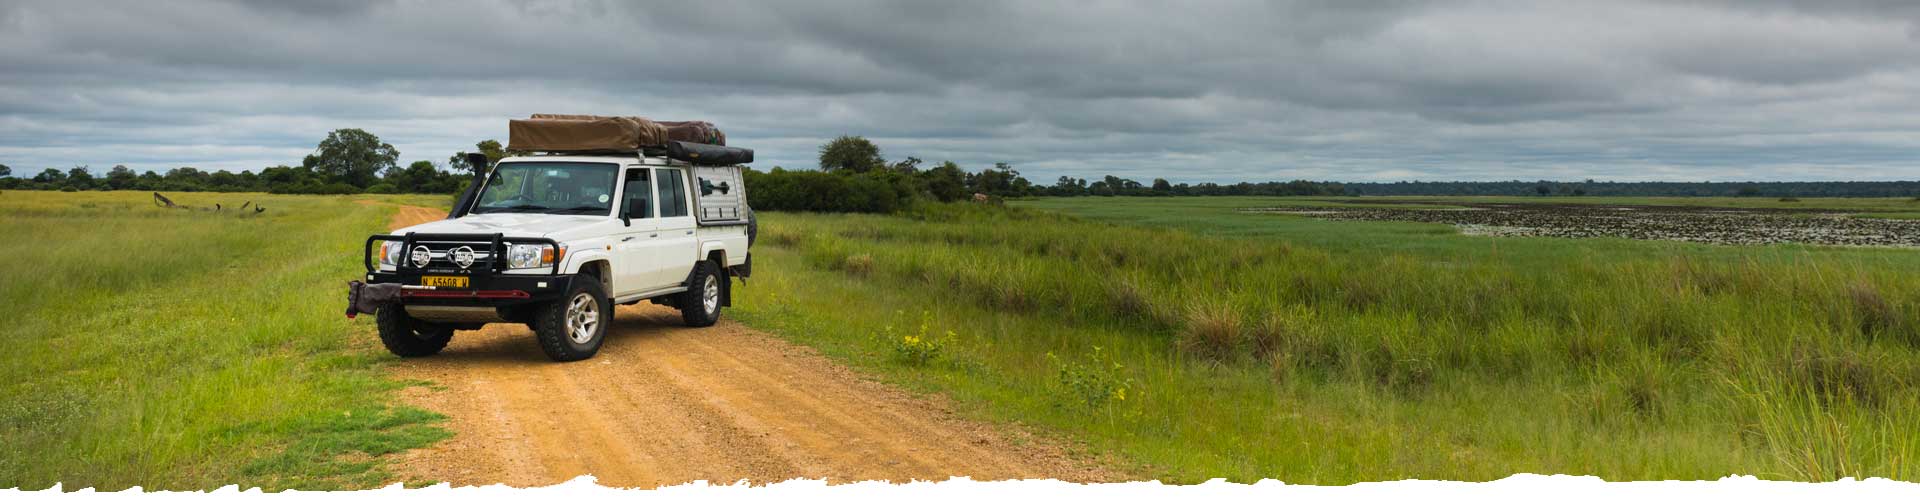 Autohuur-Namibie-Toyota-Landcruiser-4.2D-4pax-camping-banner